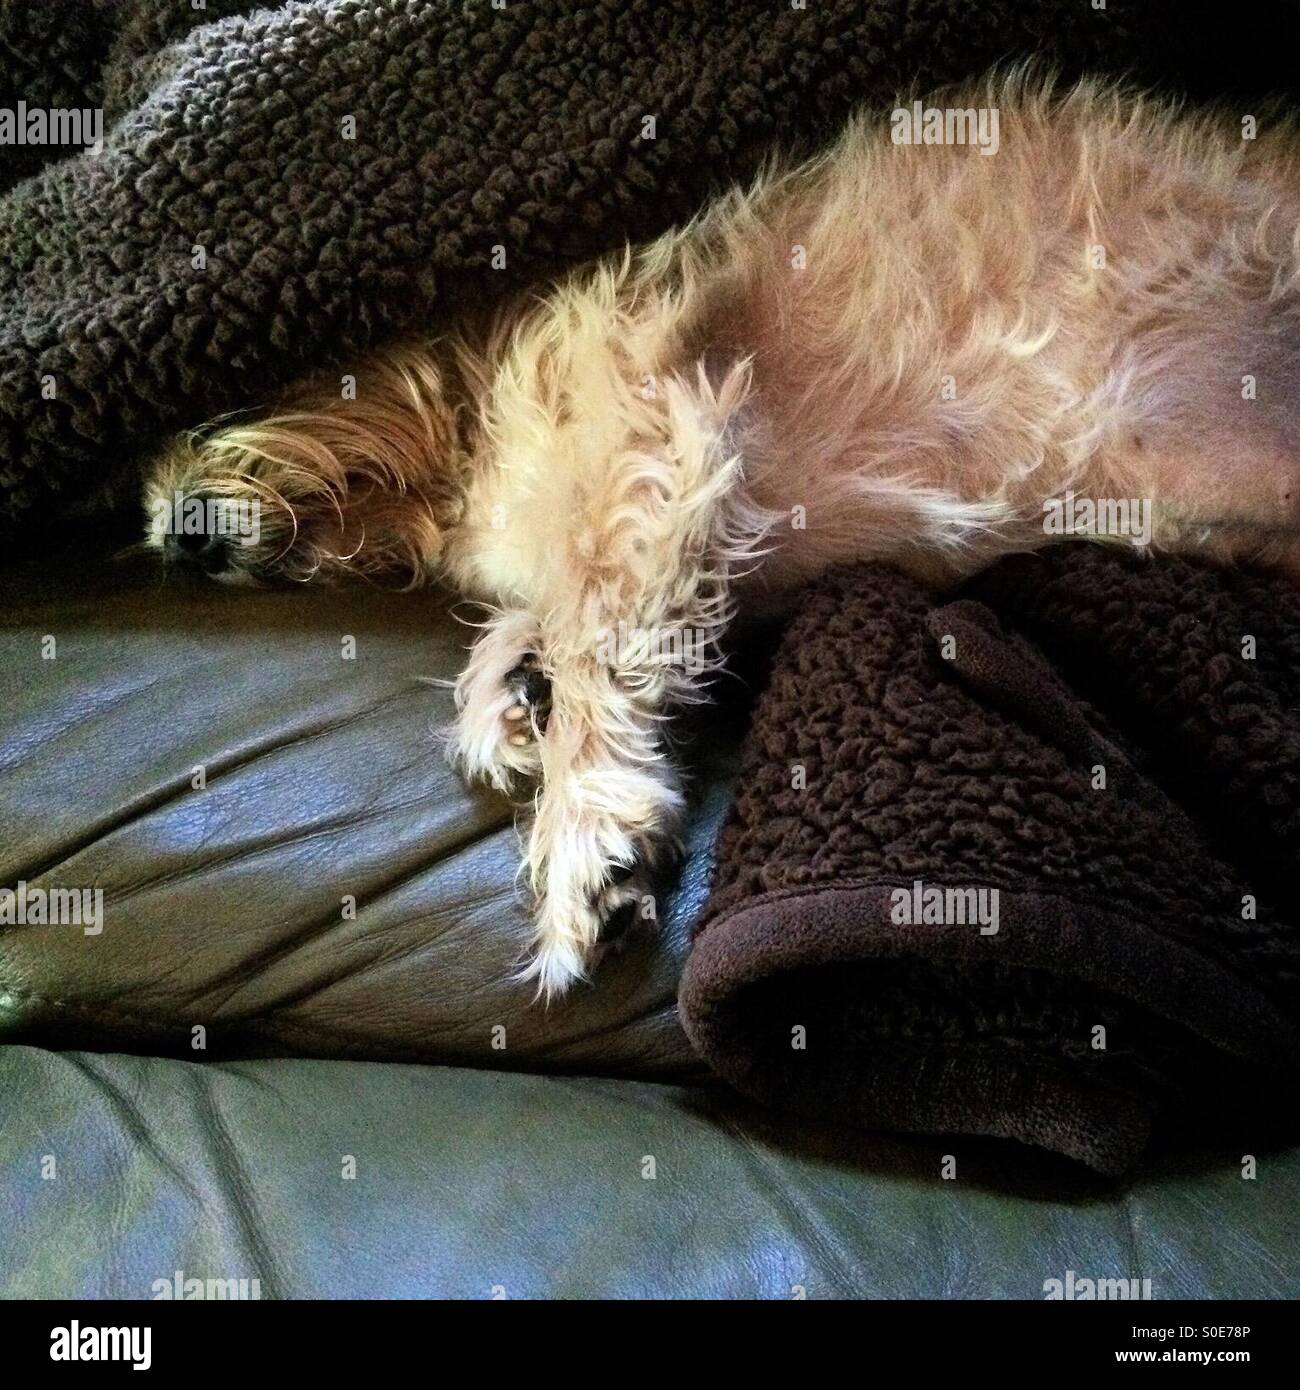 A dog sleeping underneath a blanket. Stock Photo